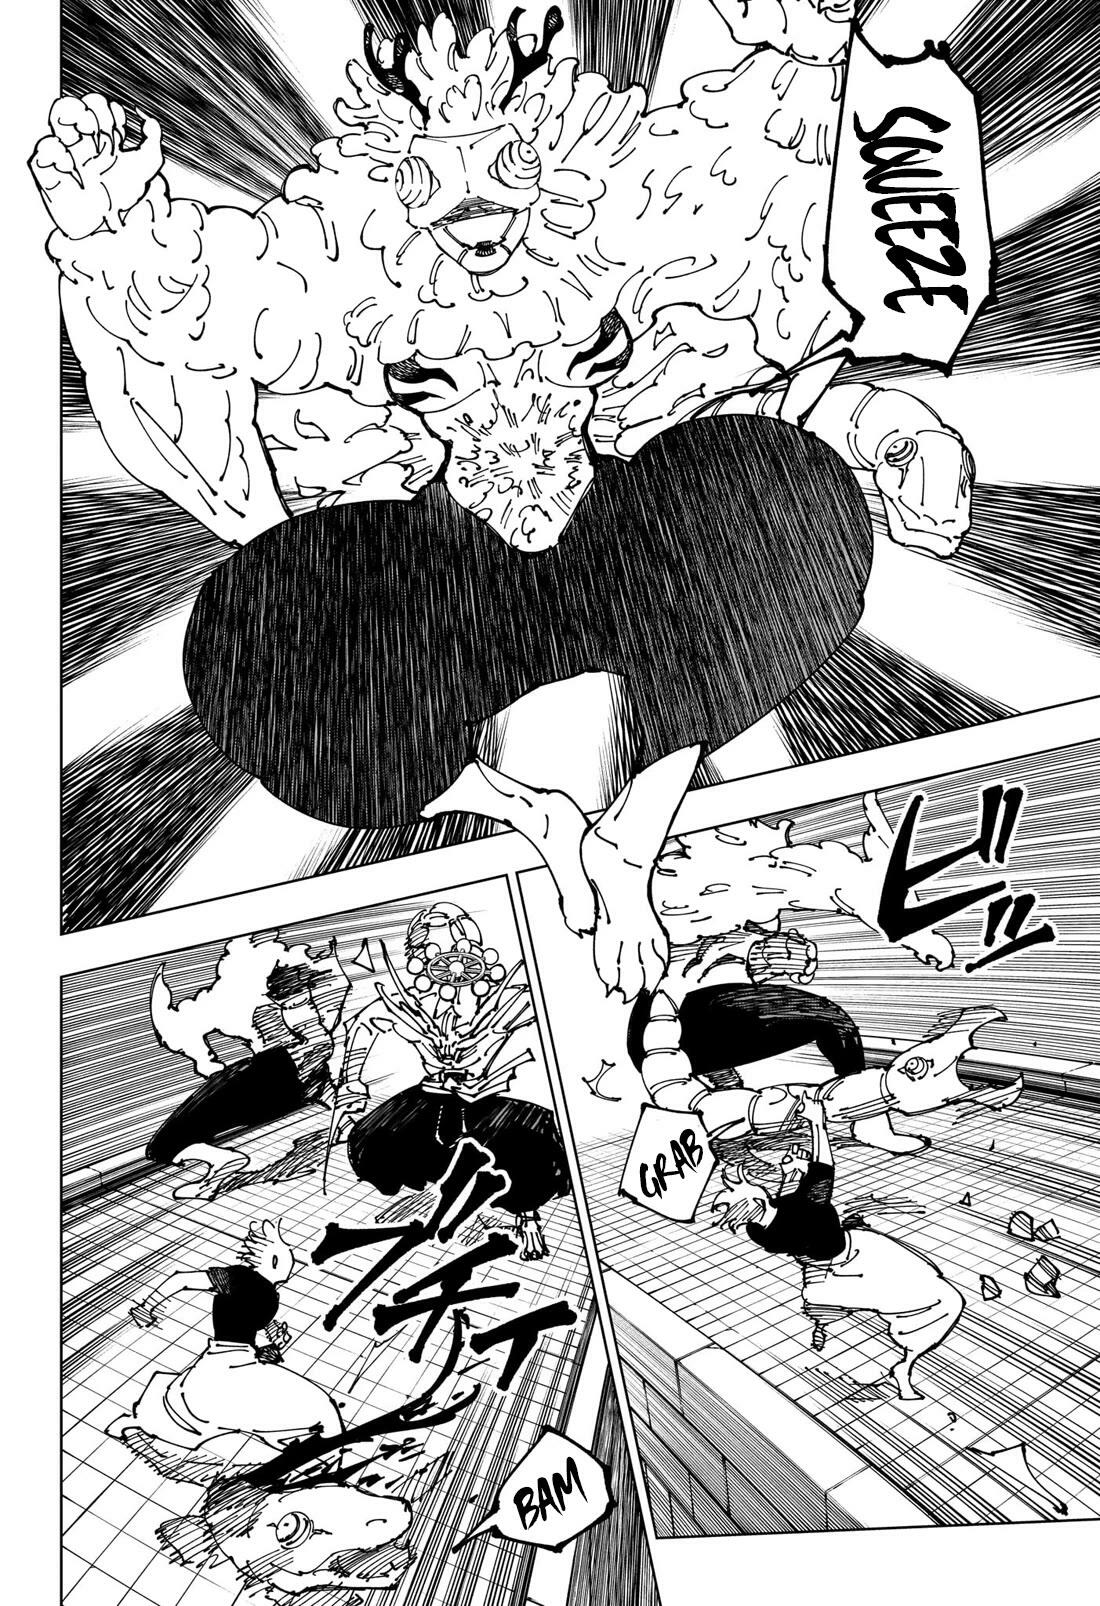 Jujutsu Kaisen Chapter 234: The Decisive Battle In The Uninhabited, Demon-Infested Shinjuku ⑫ page 7 - Mangakakalot